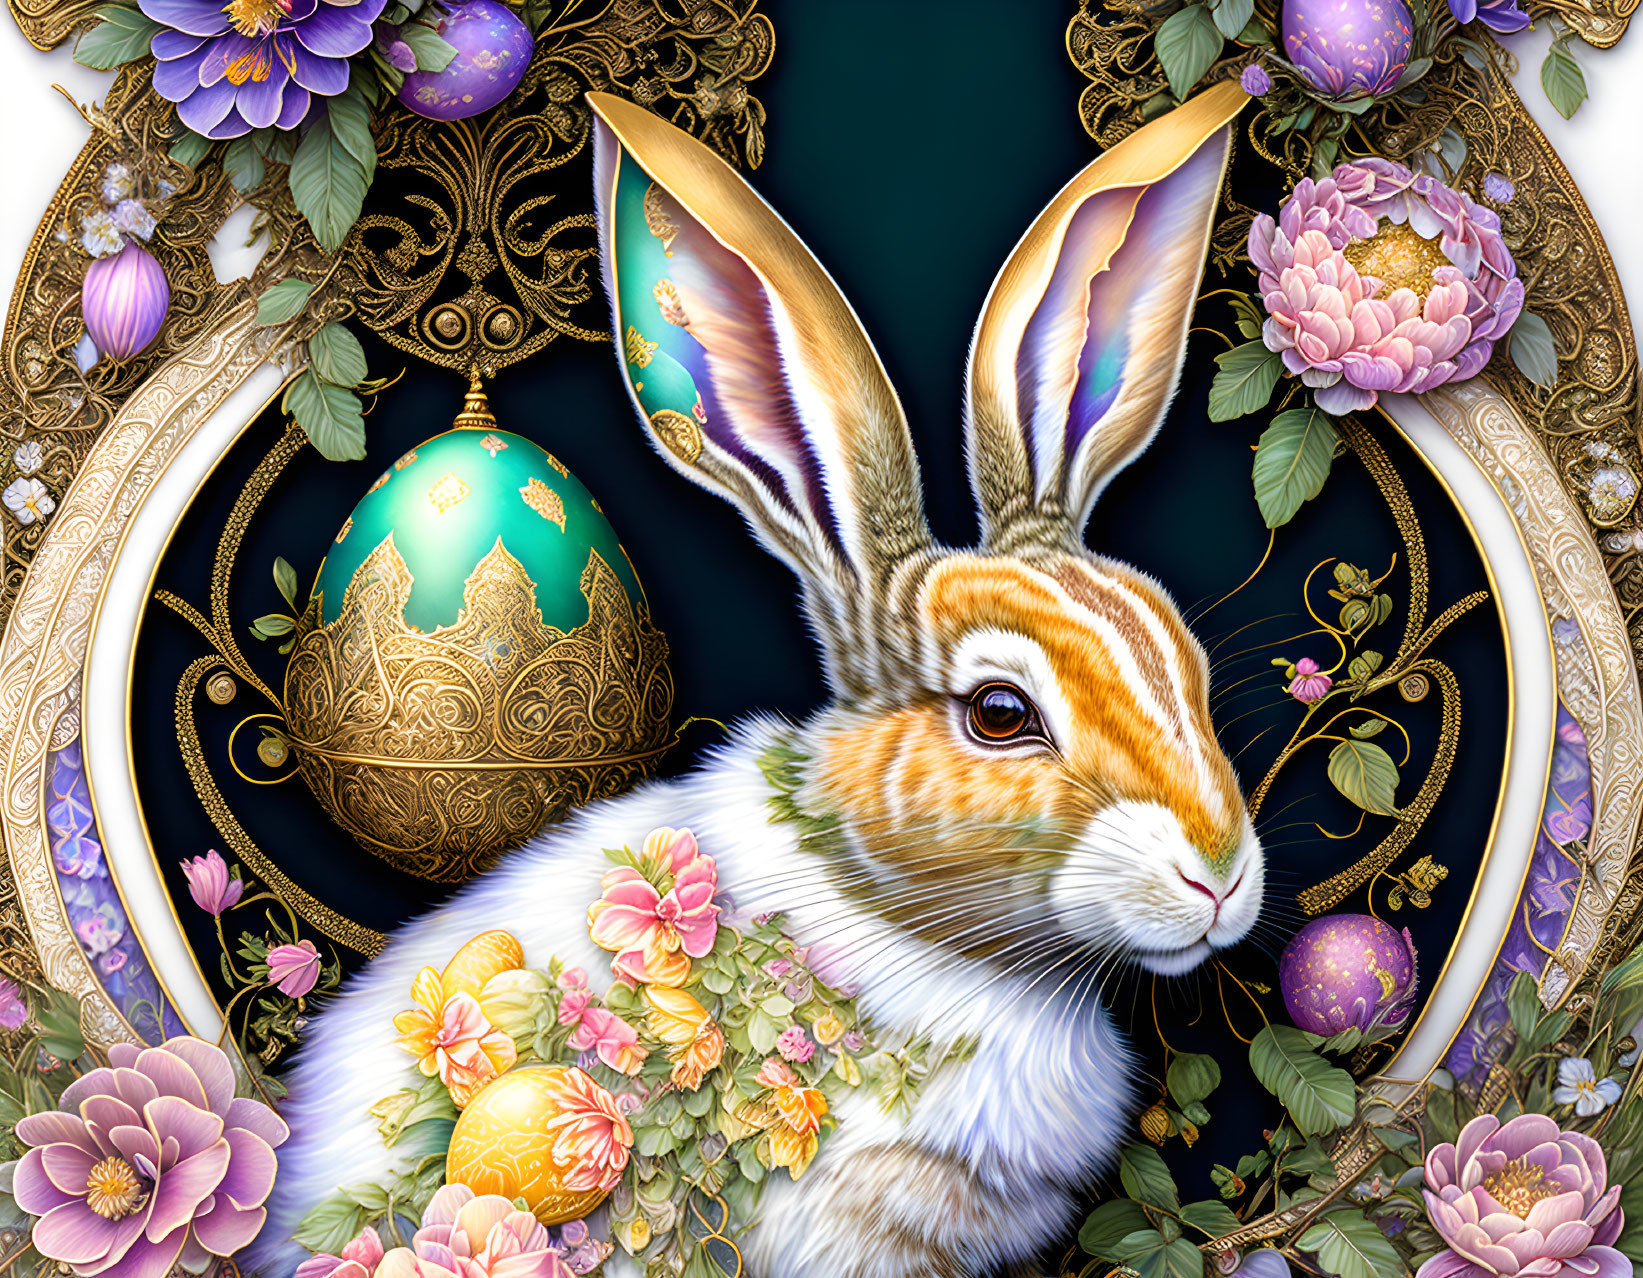 Detailed Rabbit Illustration Surrounded by Golden Frames, Flowers, and Egg